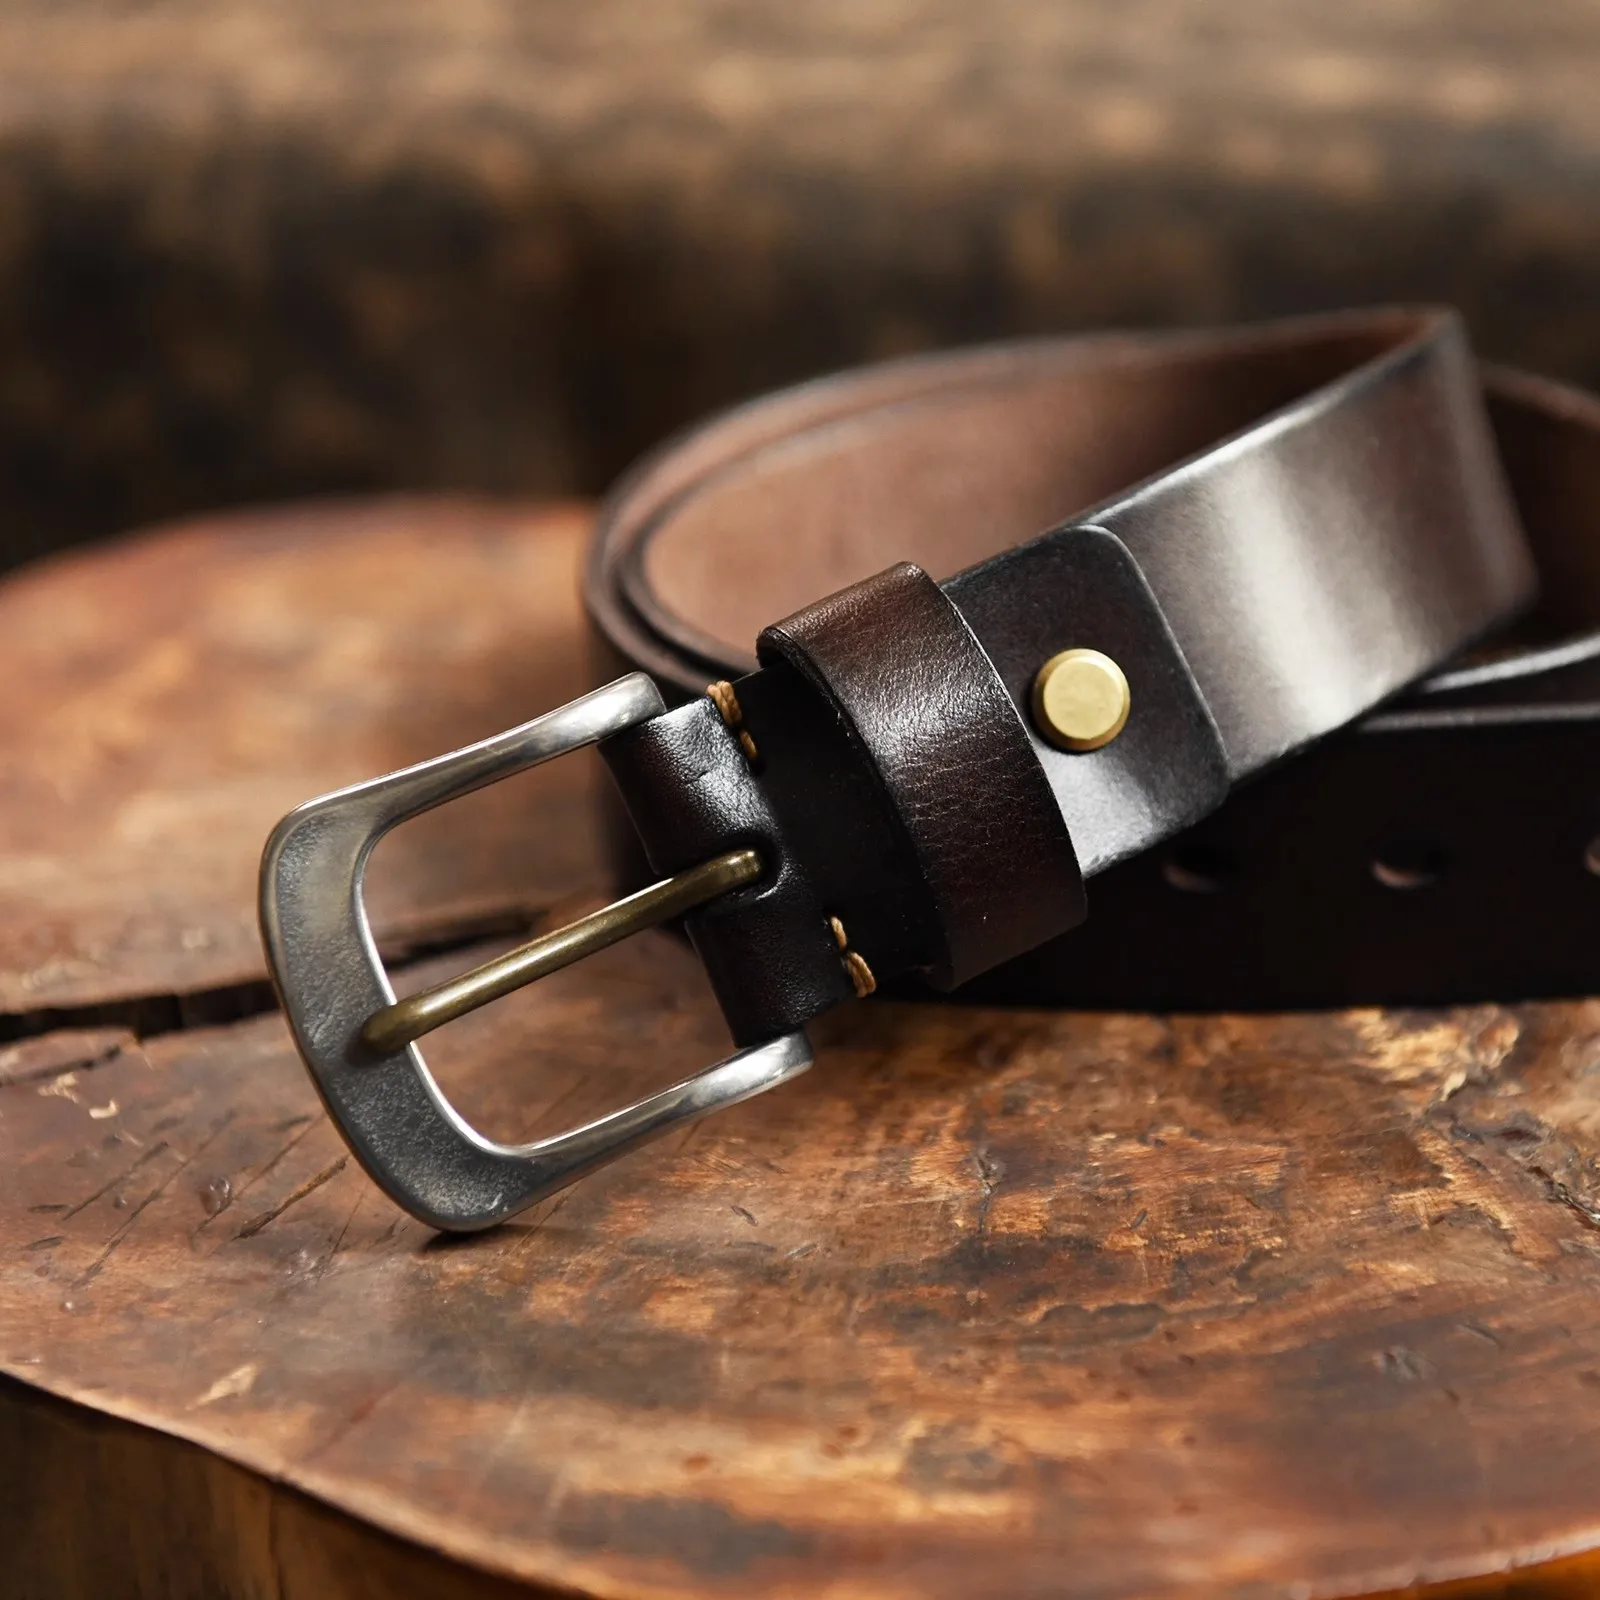  SYQOIU Belt Genuine Leather Belt Fashion Men Luxury Designer  Belts Men Copper Buckle Cowskin Strap Male Belt for Jeans Cowboy (Belt  Length : 120CM, Color : Coffee) : Clothing, Shoes & Jewelry